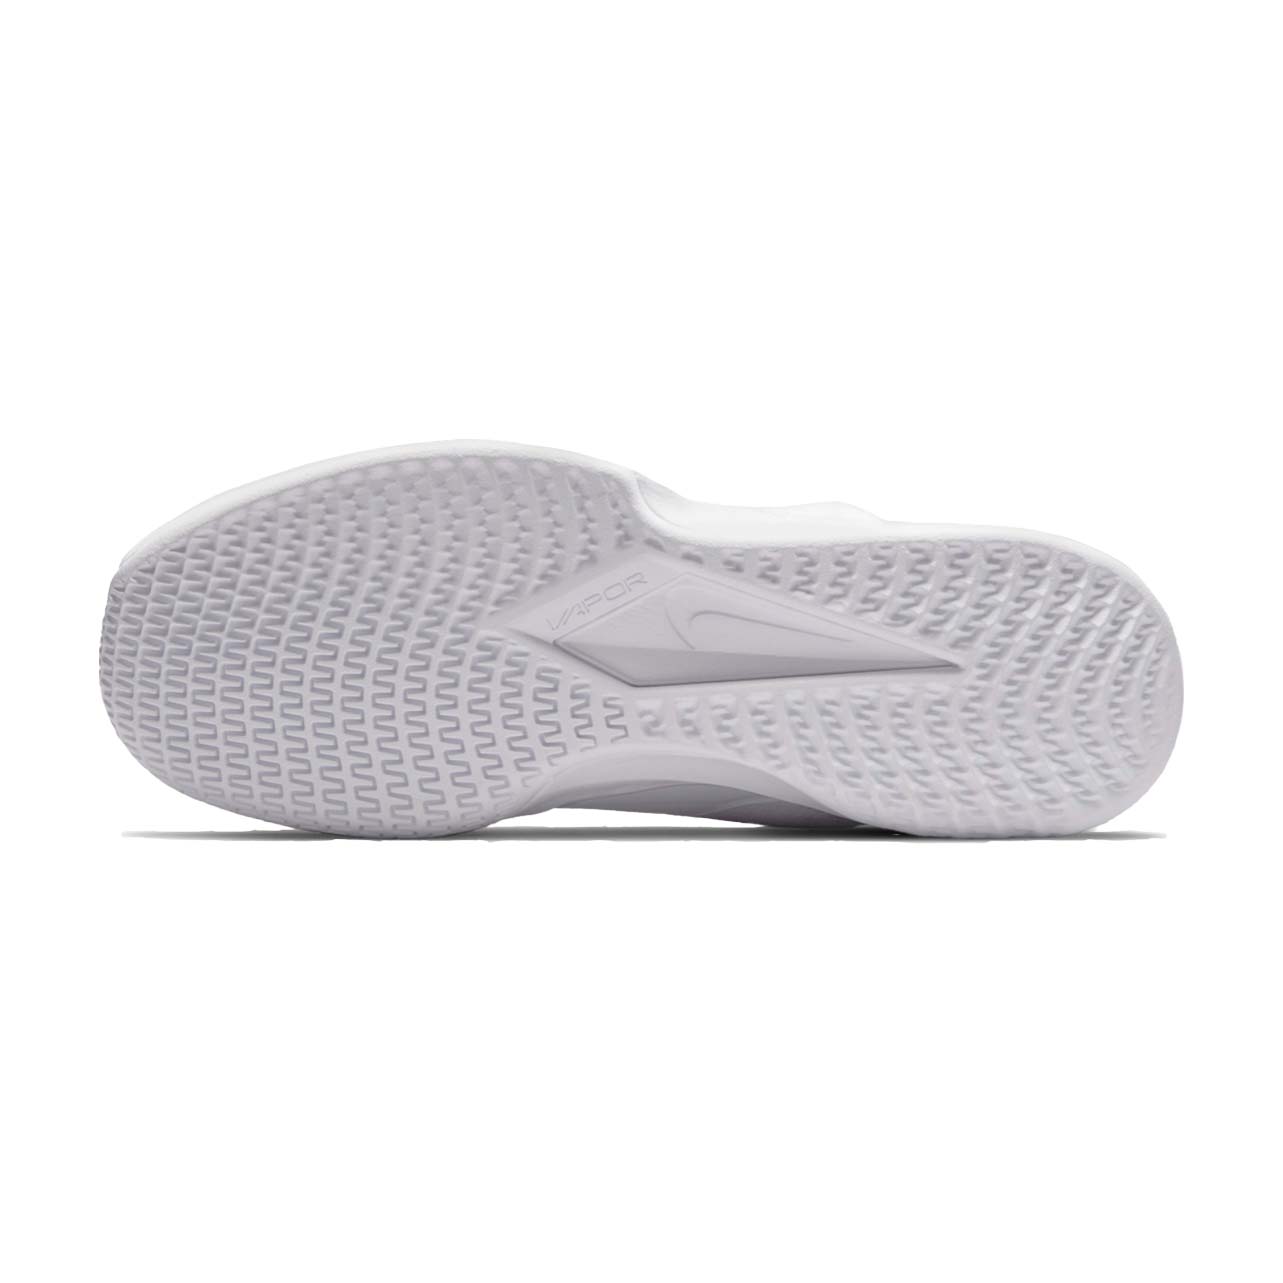 Nike Court Vapor Lite (Women's) - White/Metallic Silver